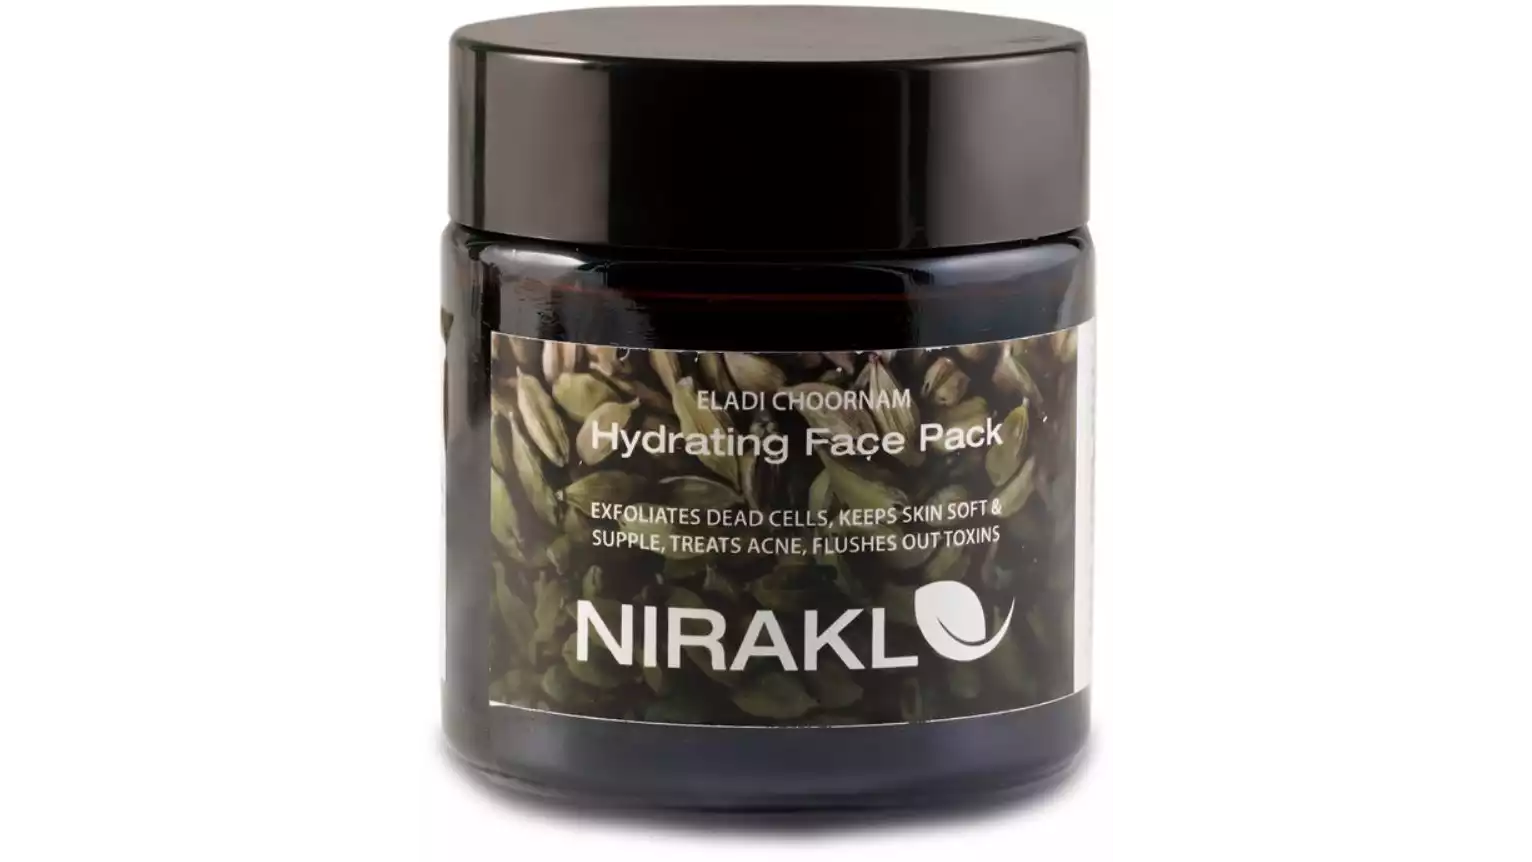 Nirakle Hydrating Face Pack Eladi Choornam (20g)